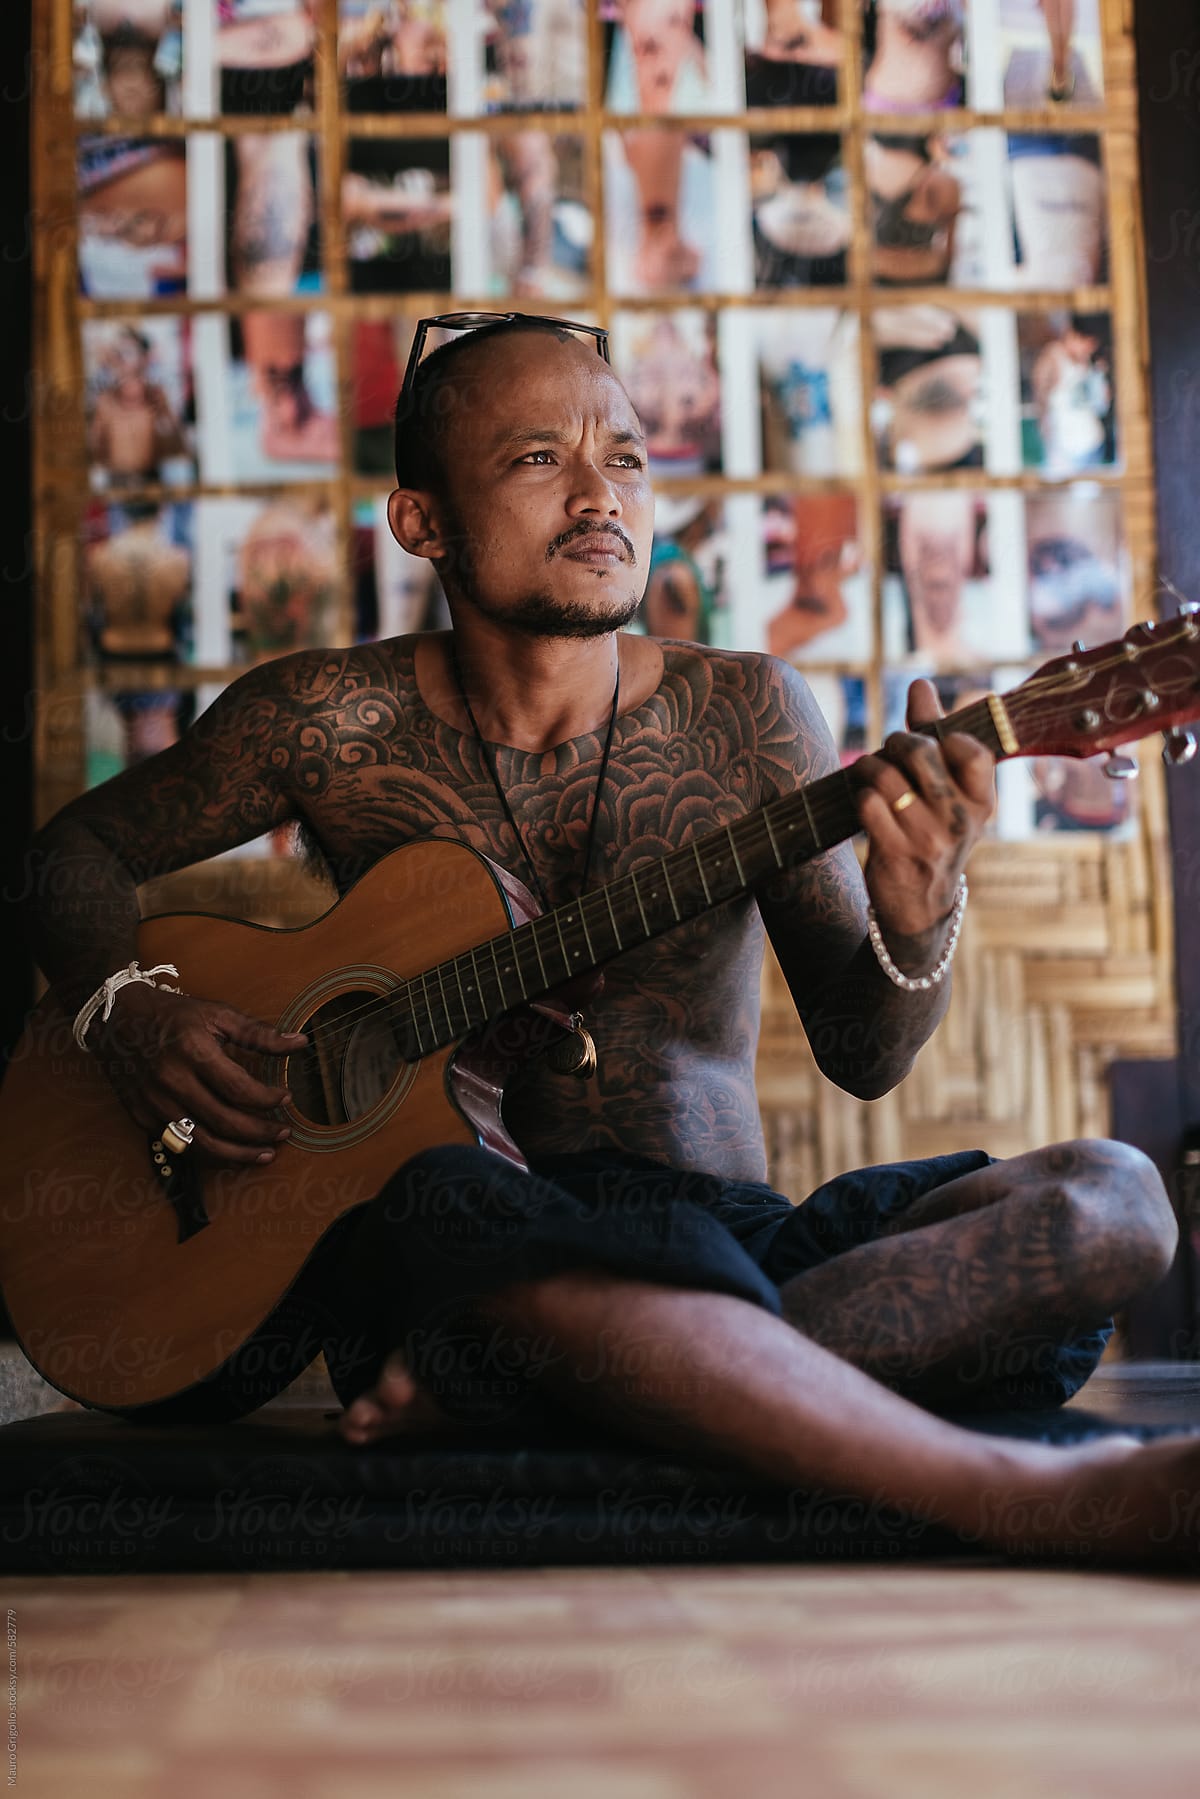 Thai tattoo artist playing guitar during a break.